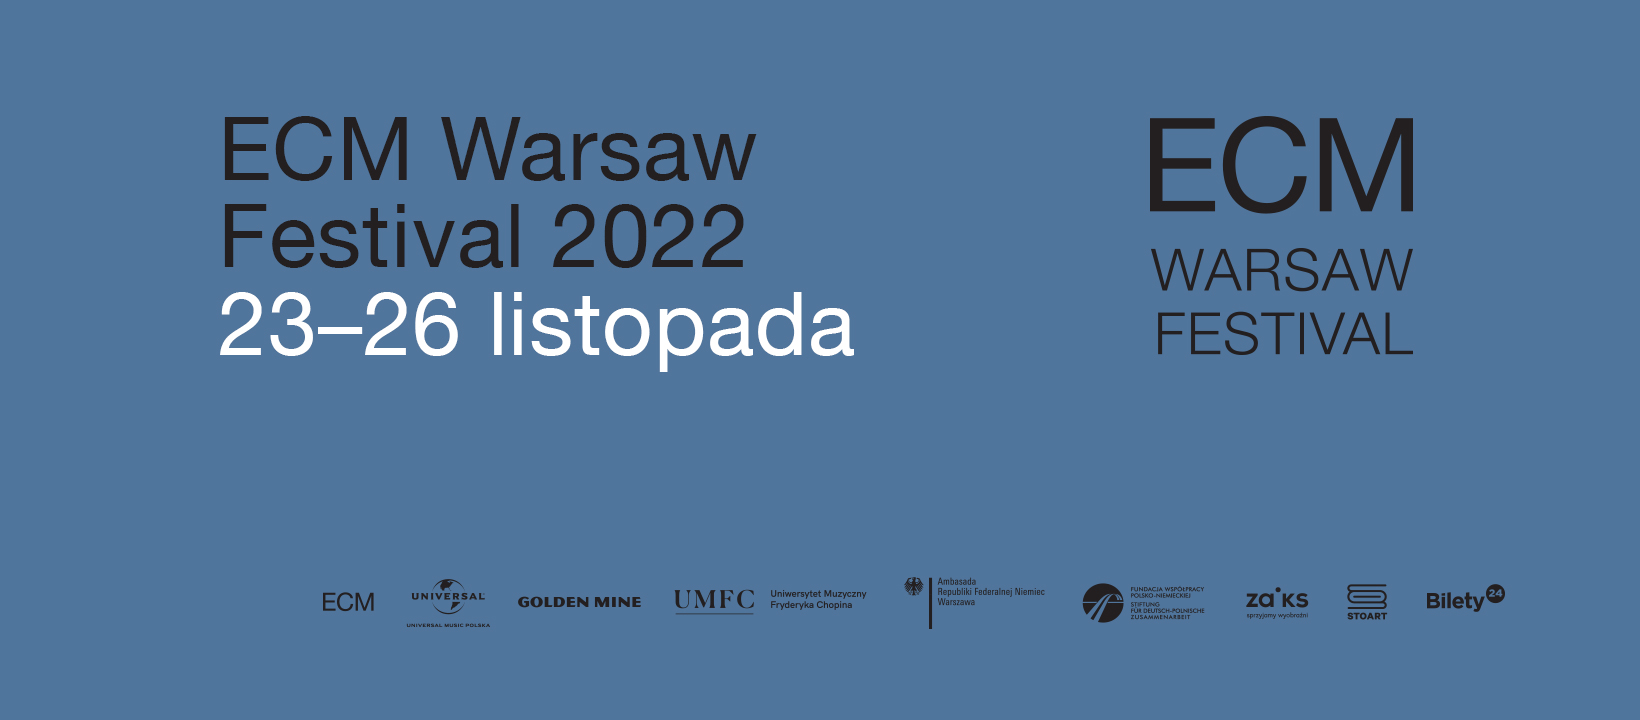 ECM Warsaw Festival 2022